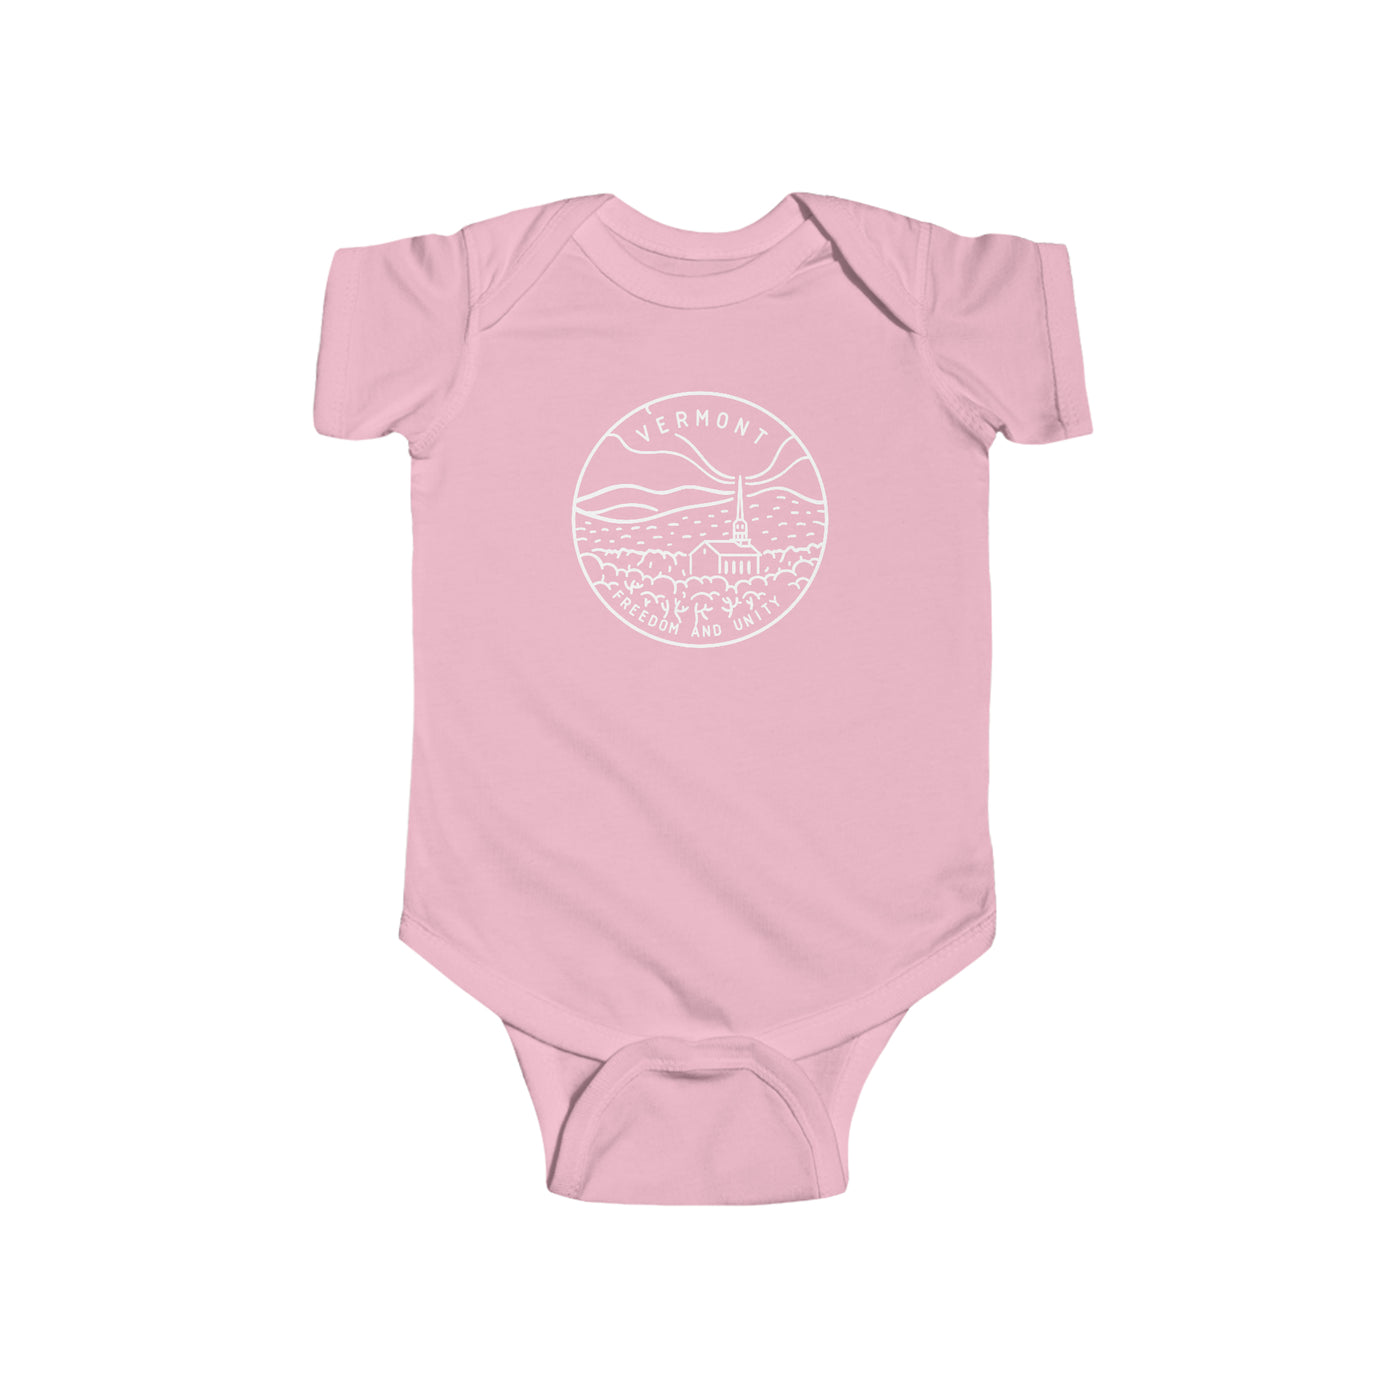 Vermont State Motto Baby Bodysuit